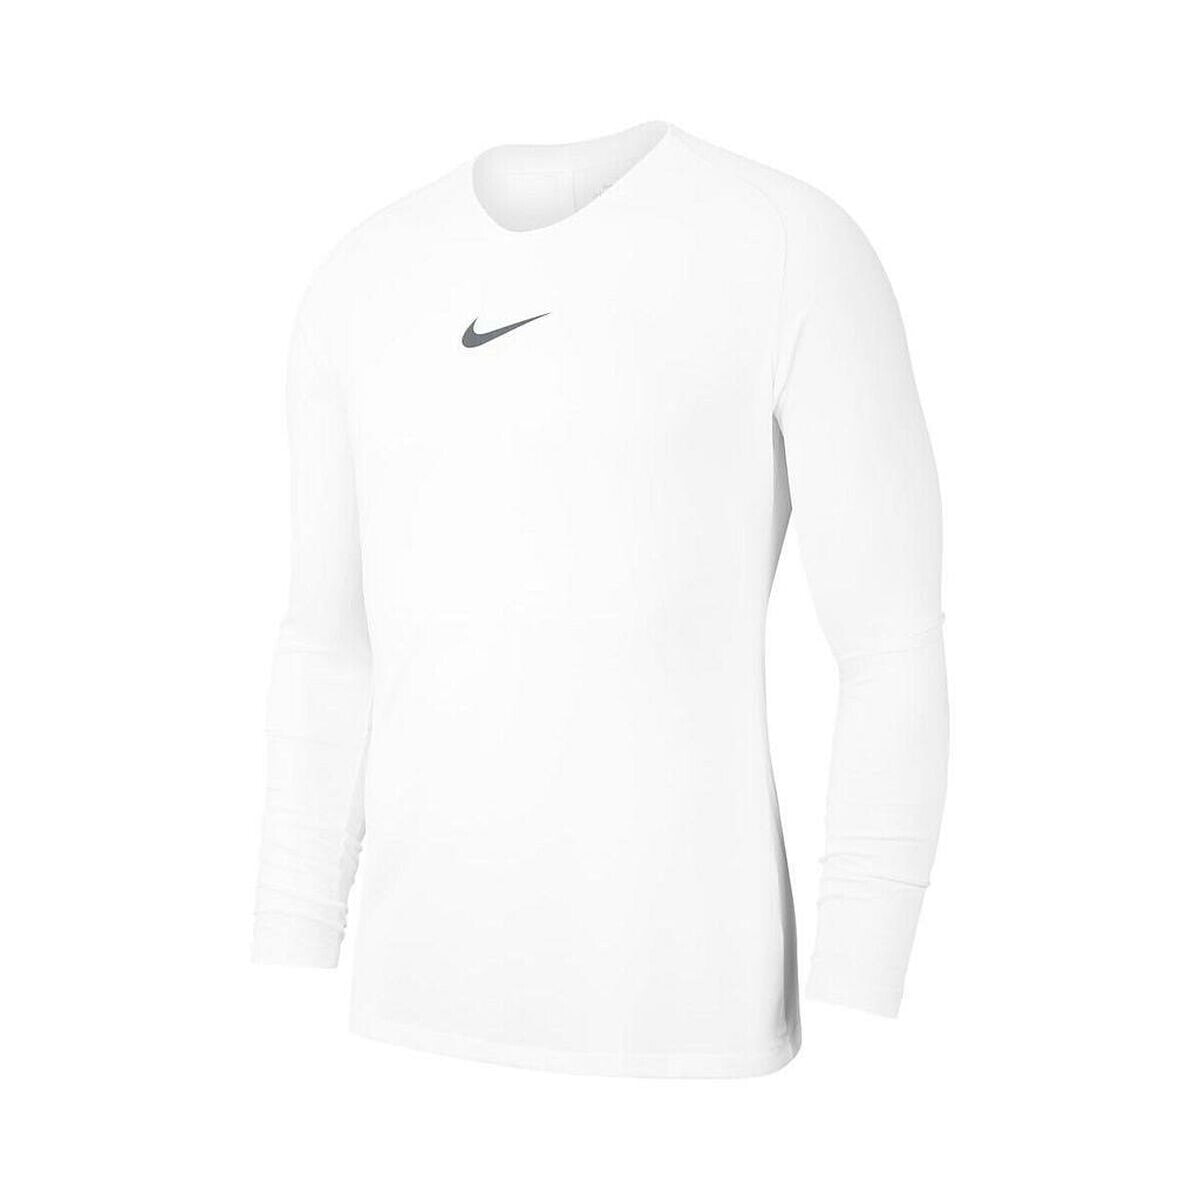 Футболка с длинным рукавом Nike PARK AV2611 100 Белый